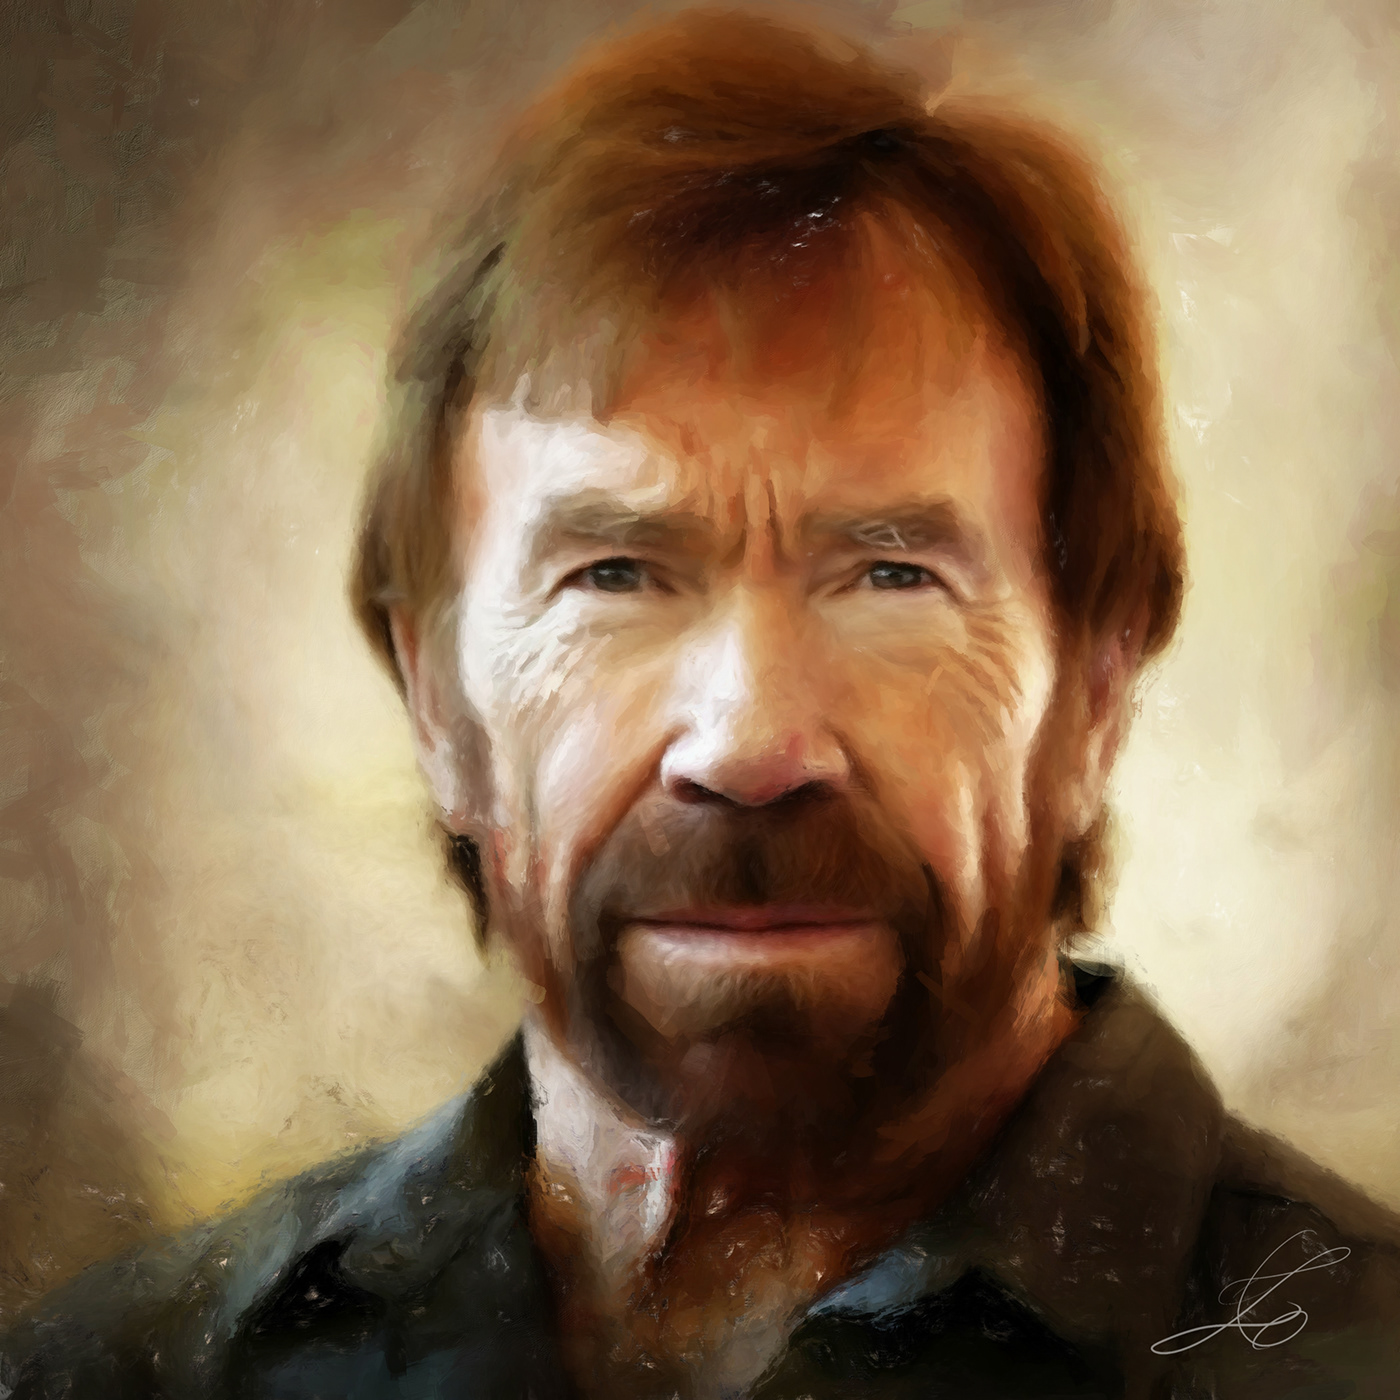 #lone wolf Character design  Chuck Norris Digital Art  digital painting human face Texas Rangers